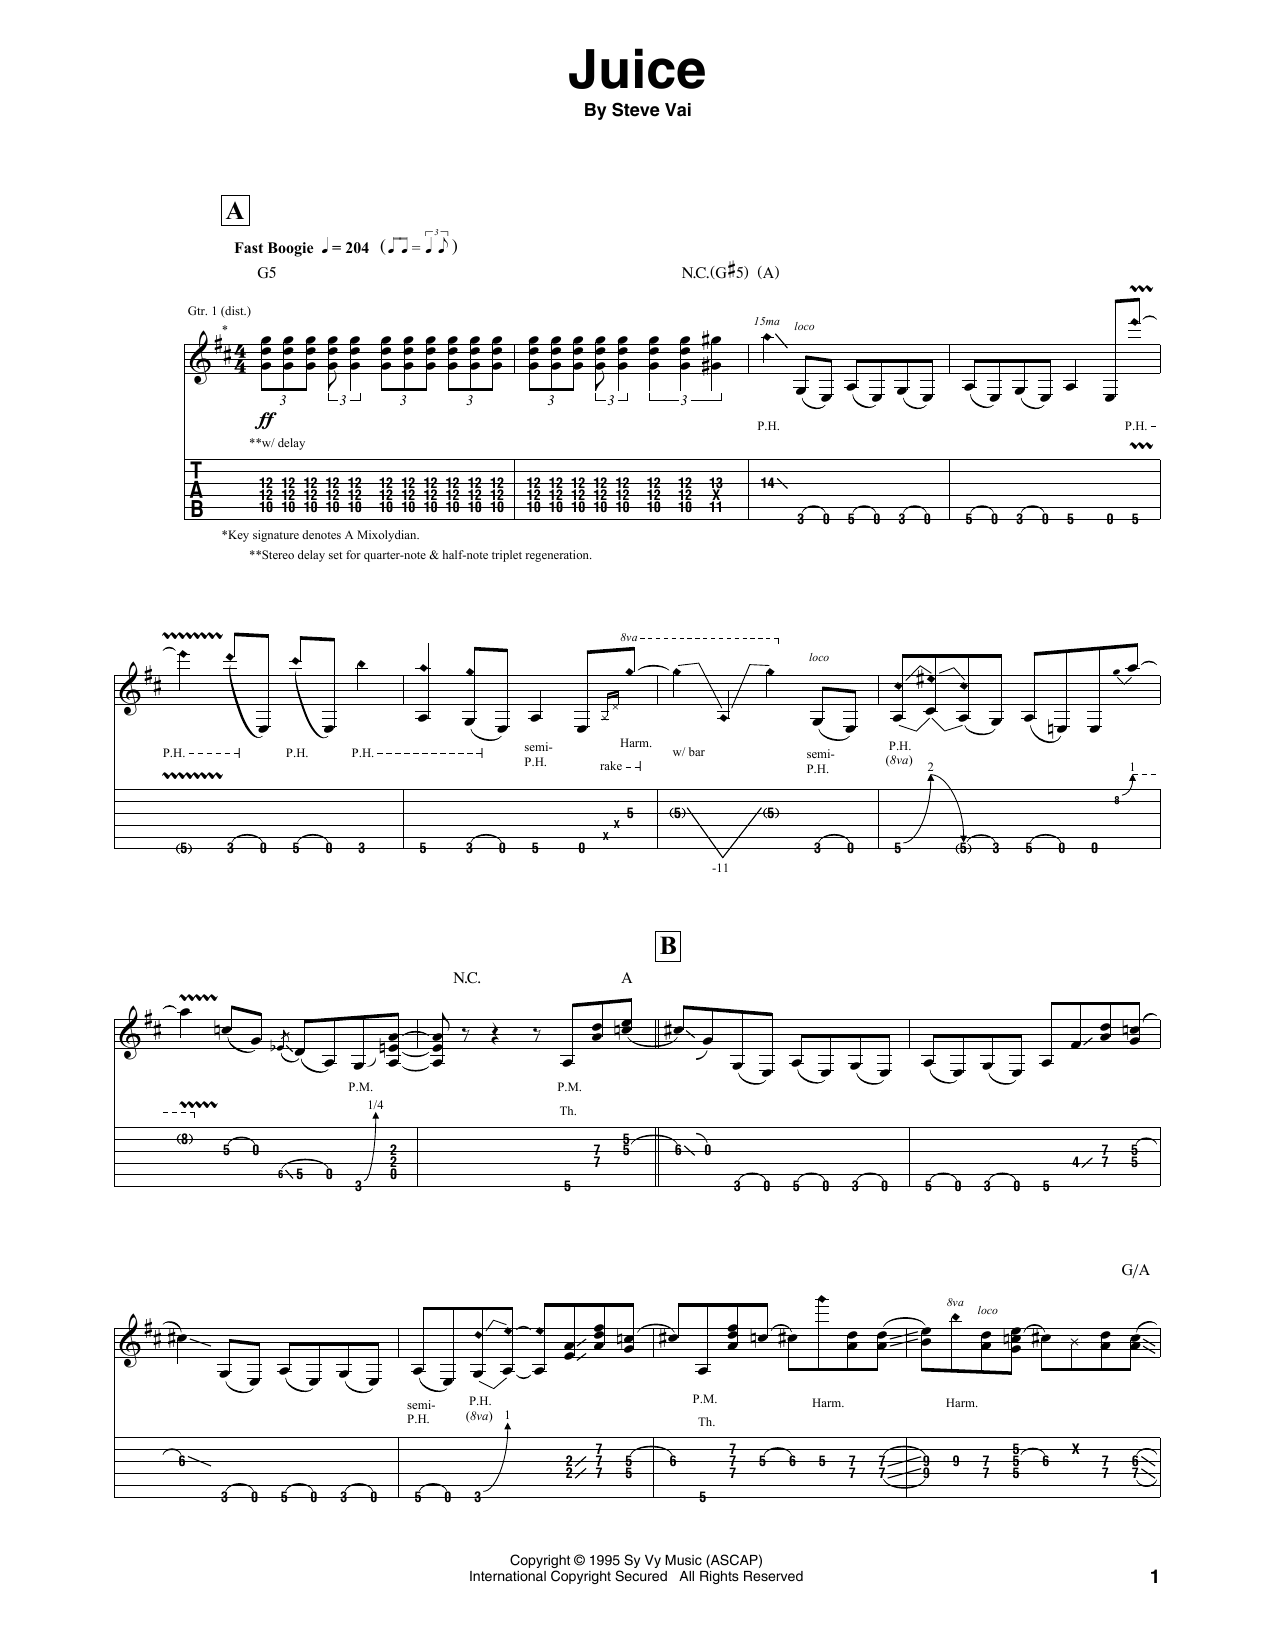 Steve Vai Juice Sheet Music Notes & Chords for Guitar Tab - Download or Print PDF